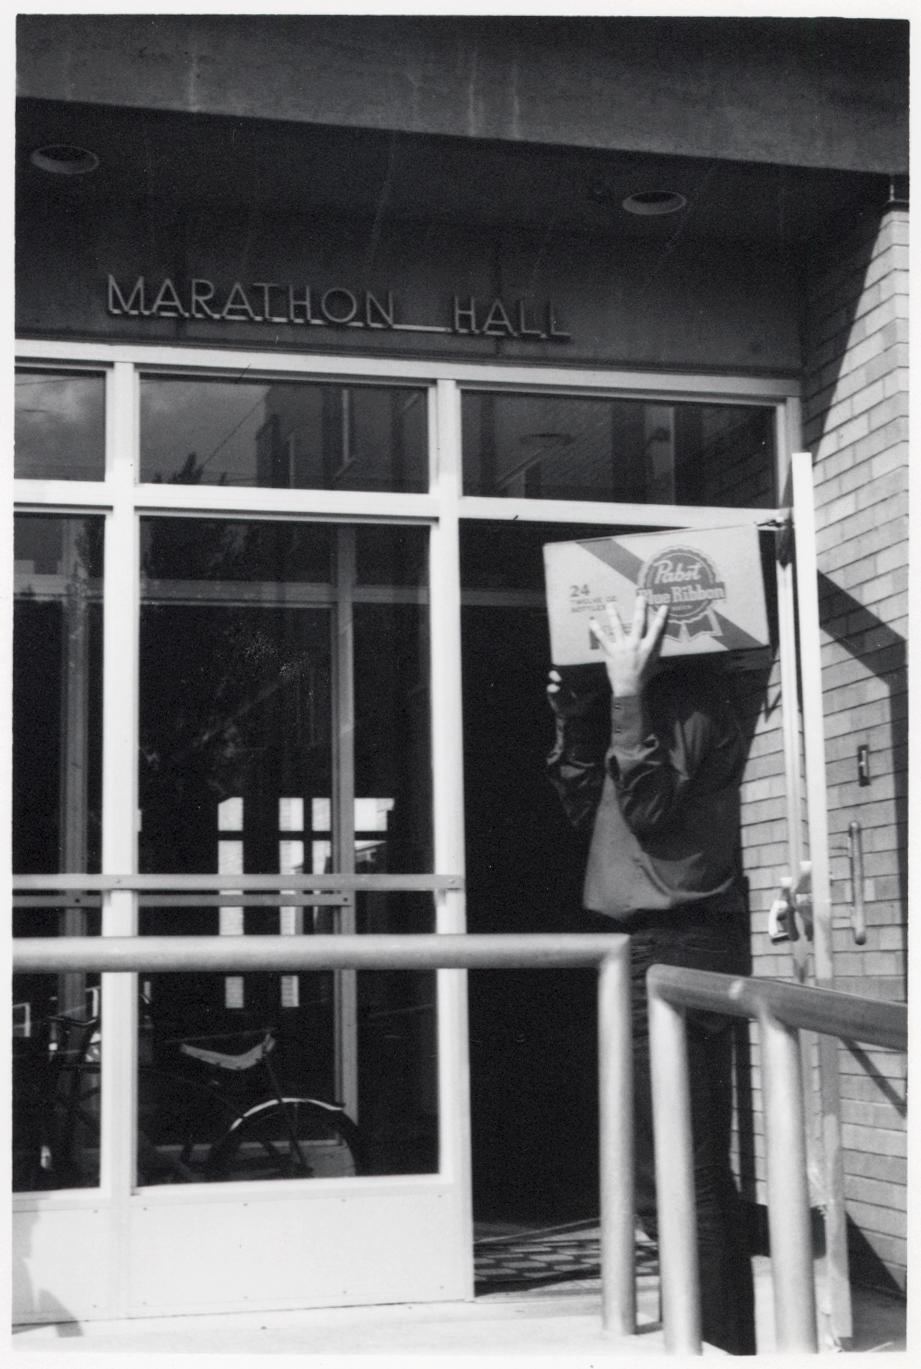 Marathon Hall student life